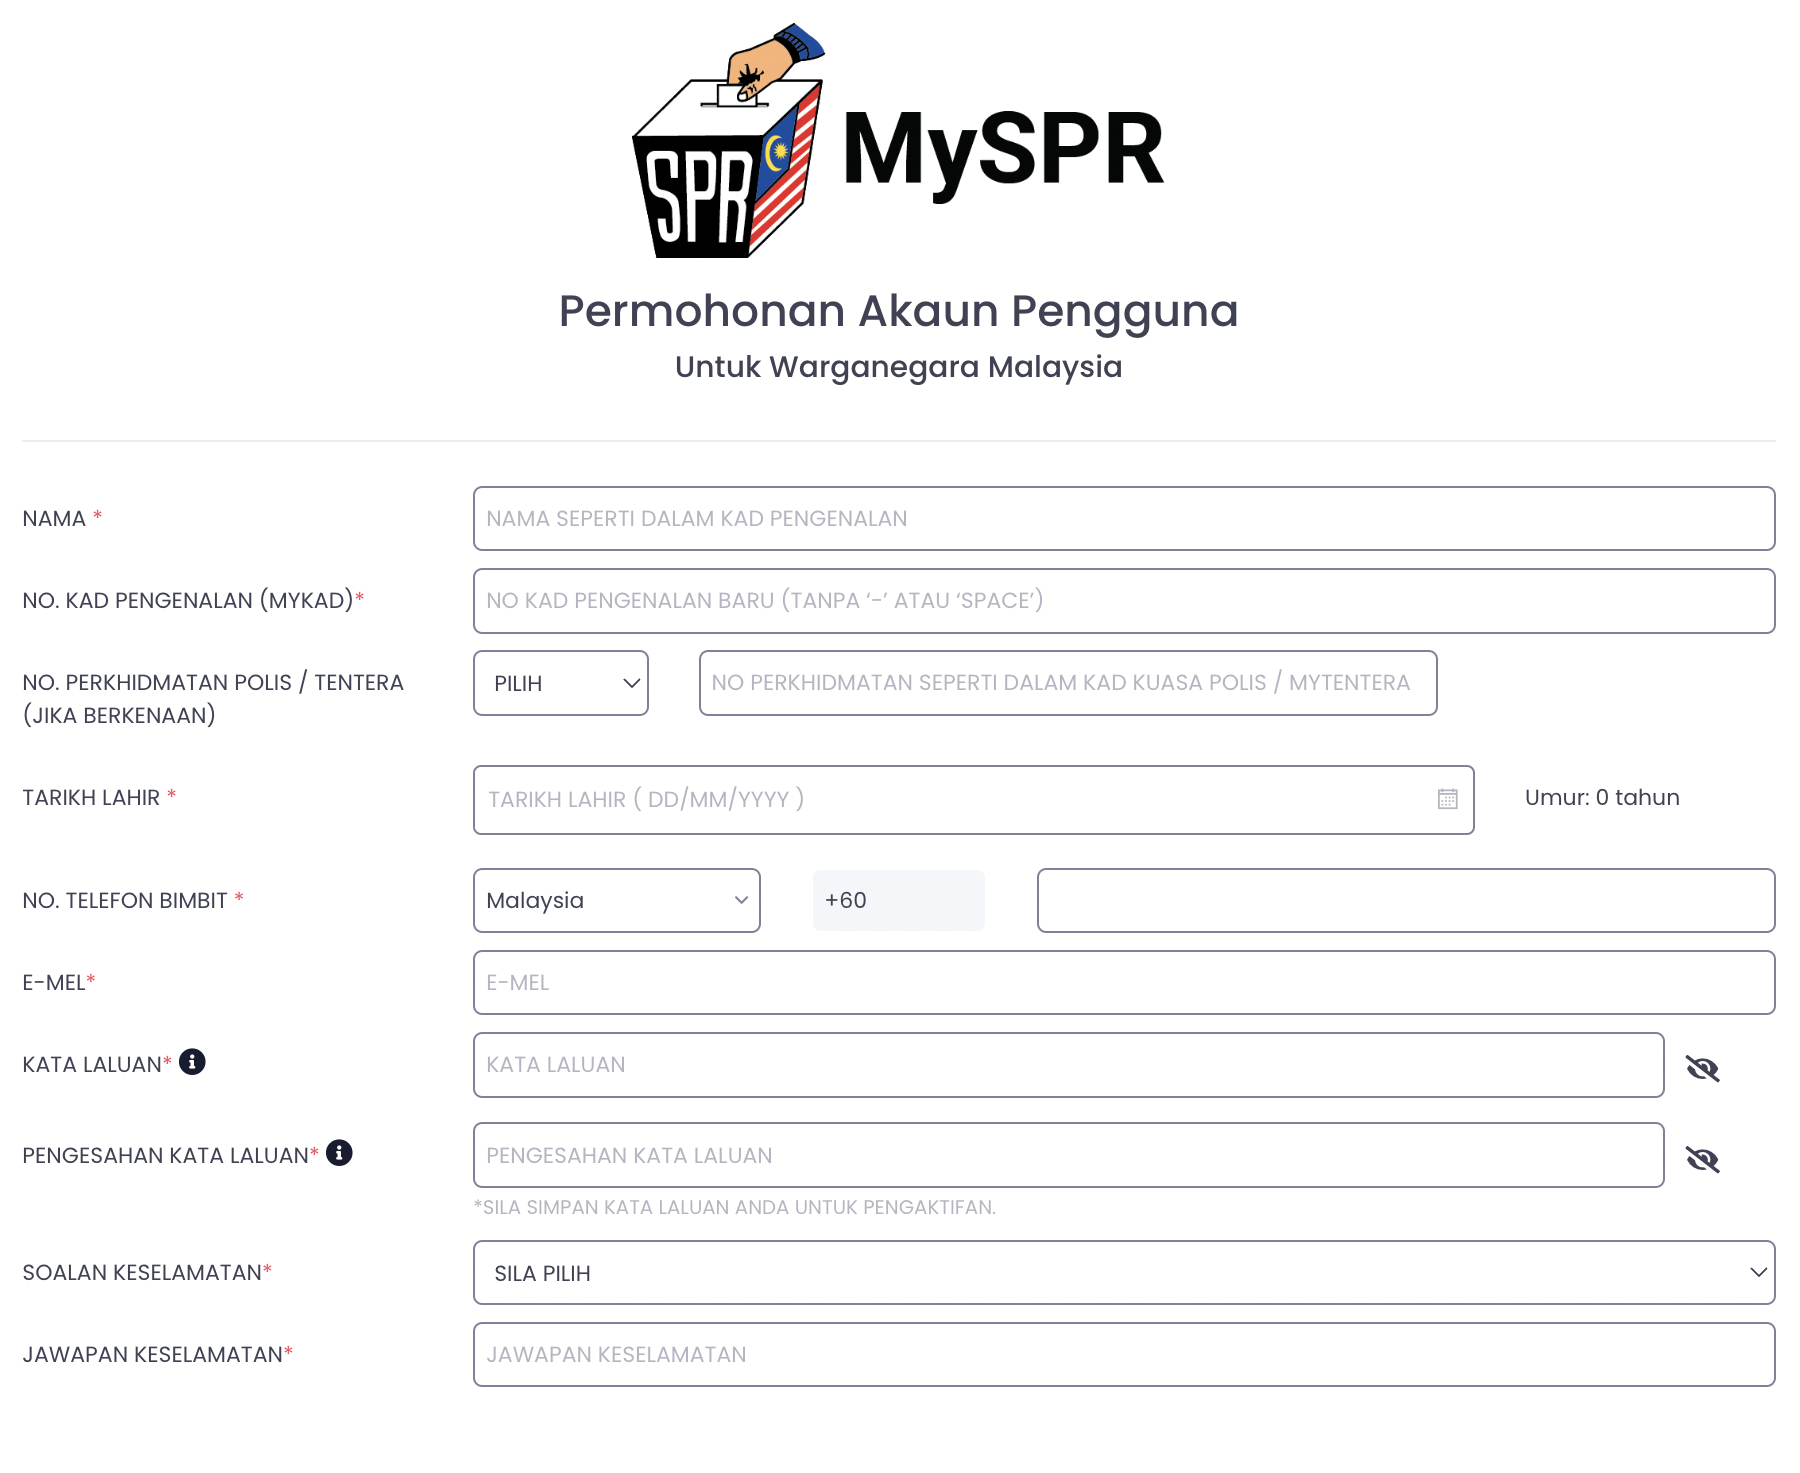 Myspr application form